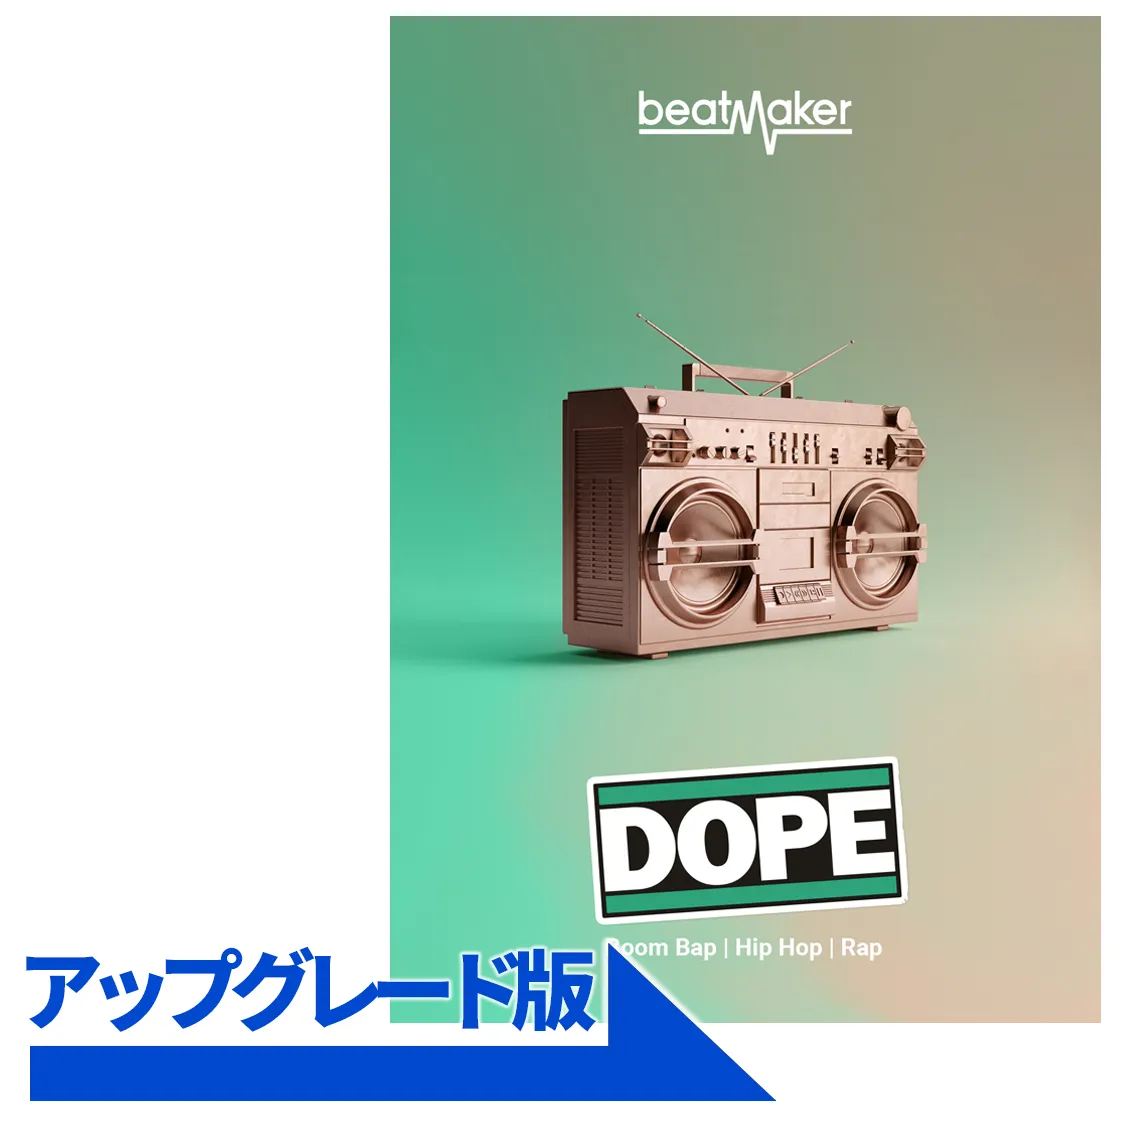 Beatmaker Dope アップグレード版